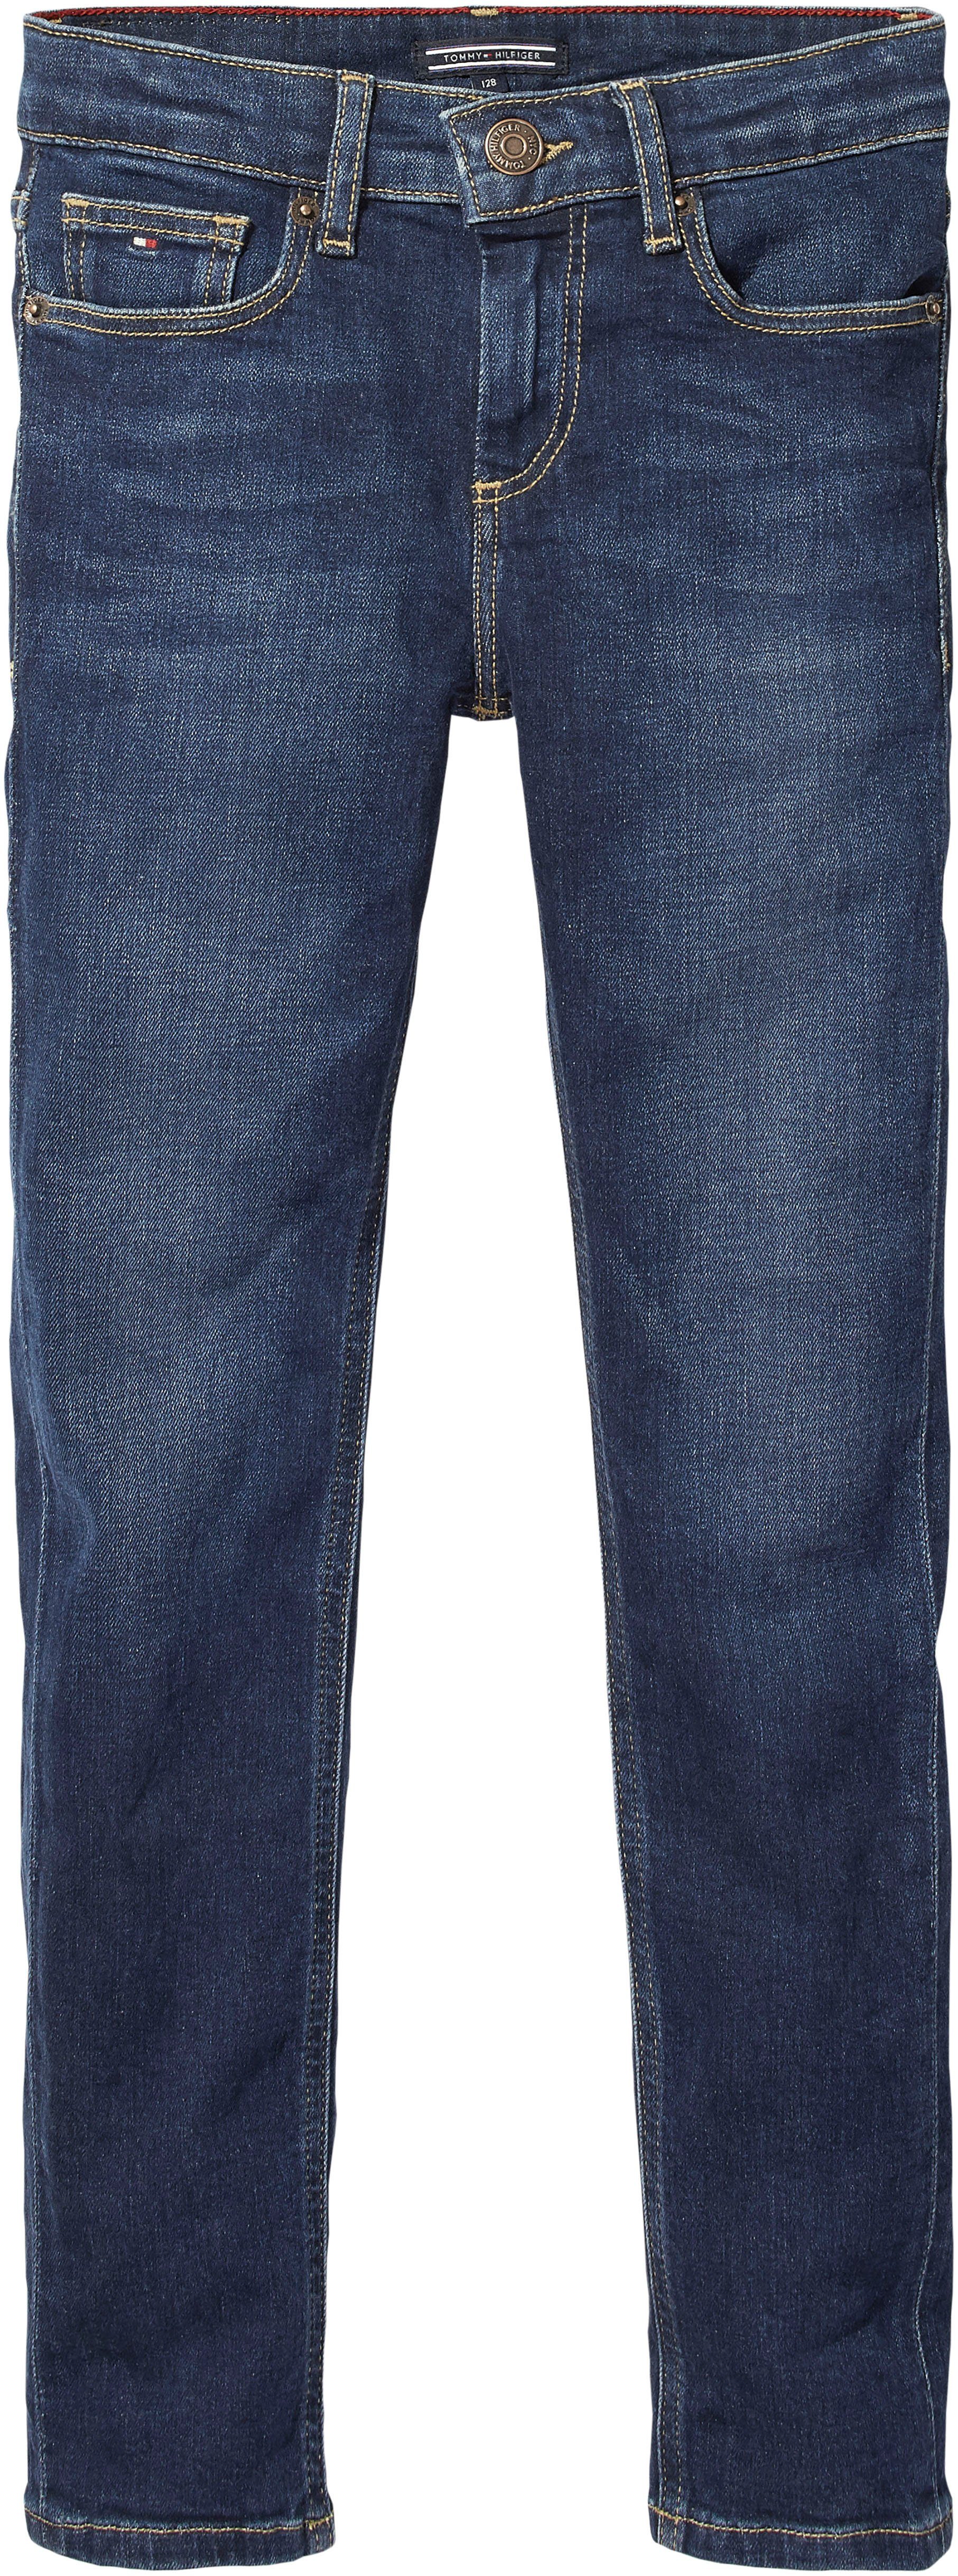 Tommy Hilfiger Stretch-Jeans SCANTON DARK | Stretchjeans